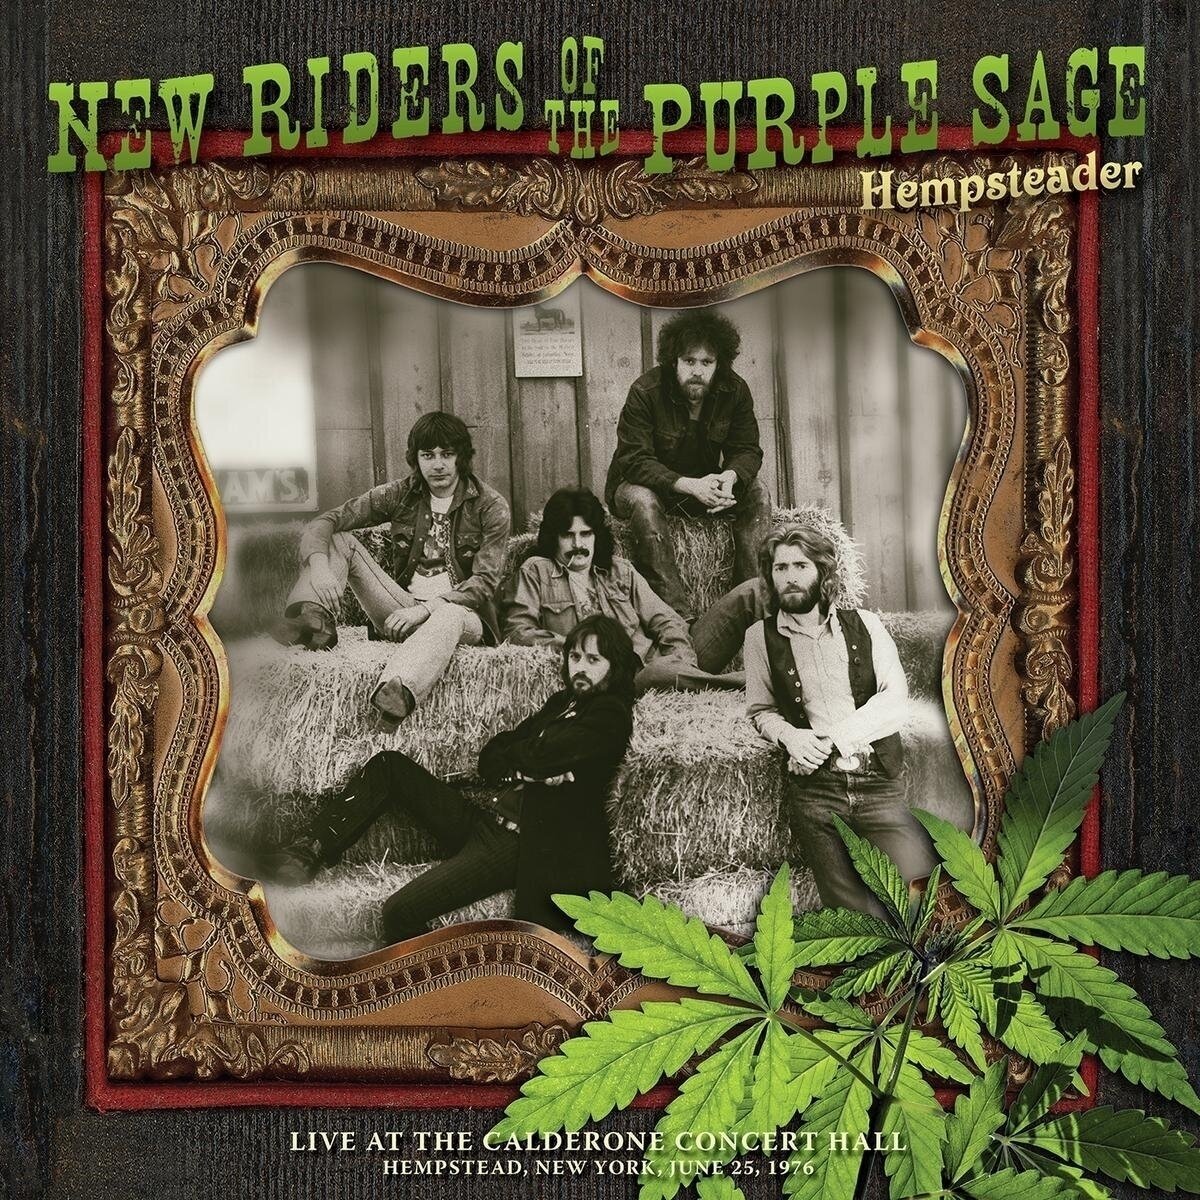 Music CD New Riders Of The Purple Sage - Hempsteader: Live At The Calderone Concert Hall, Hempstead, New York, June 25, 1976 (CD)